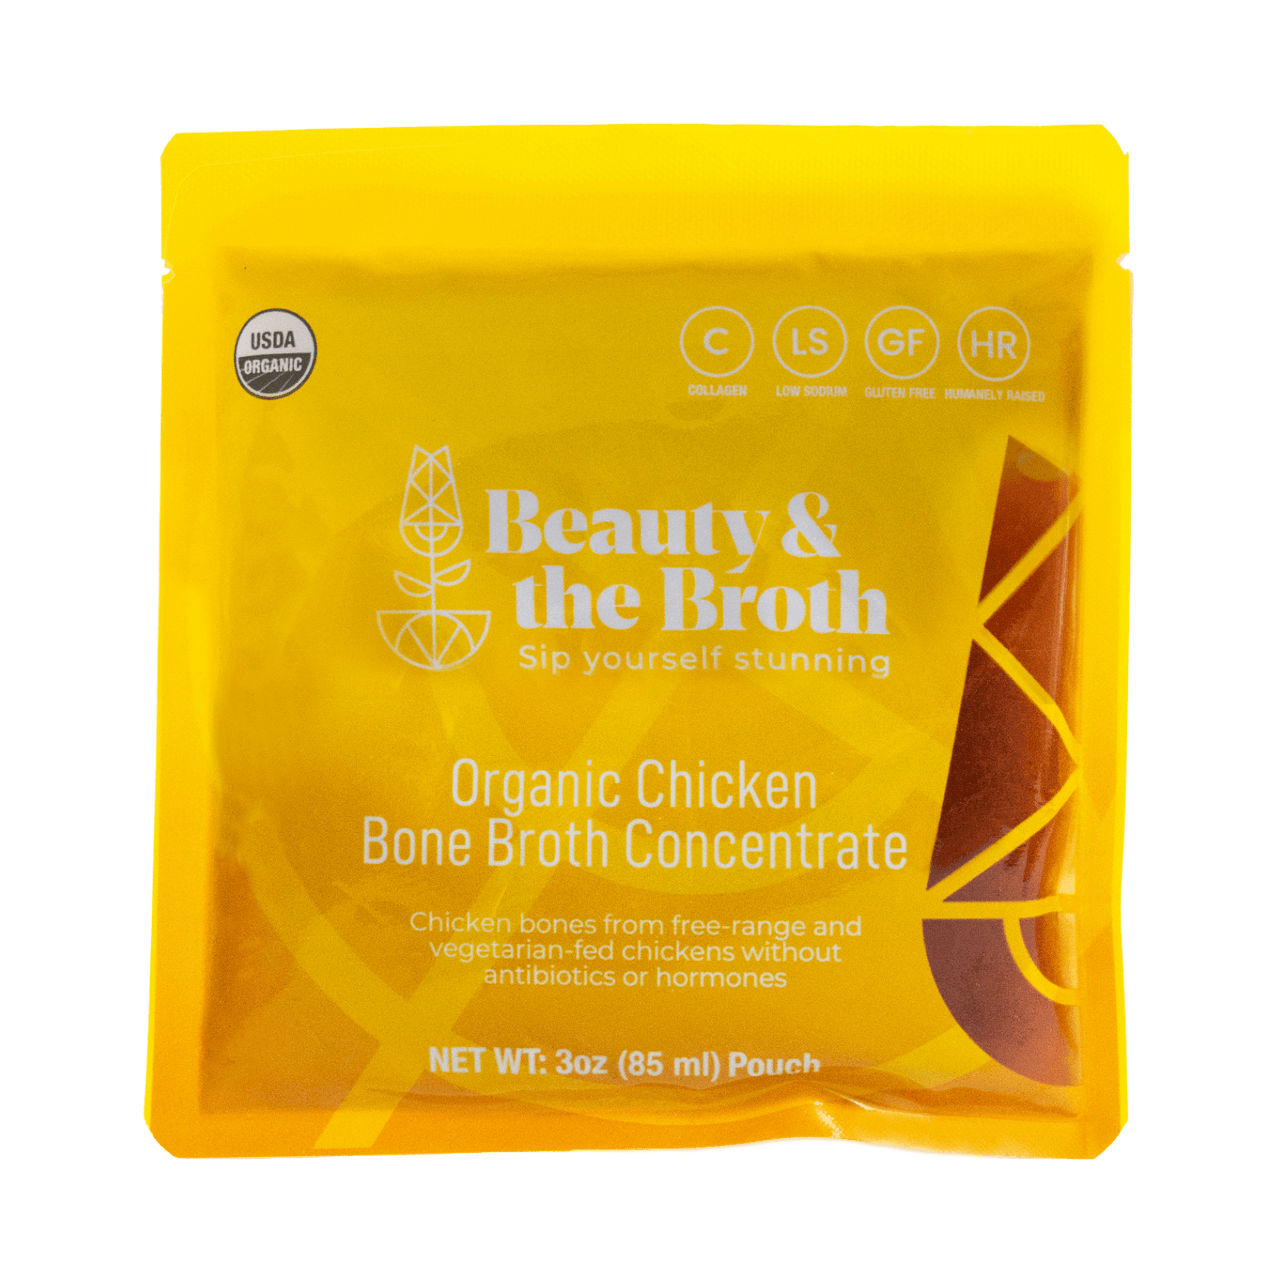 Organic Chicken Bone Broth Concentrate